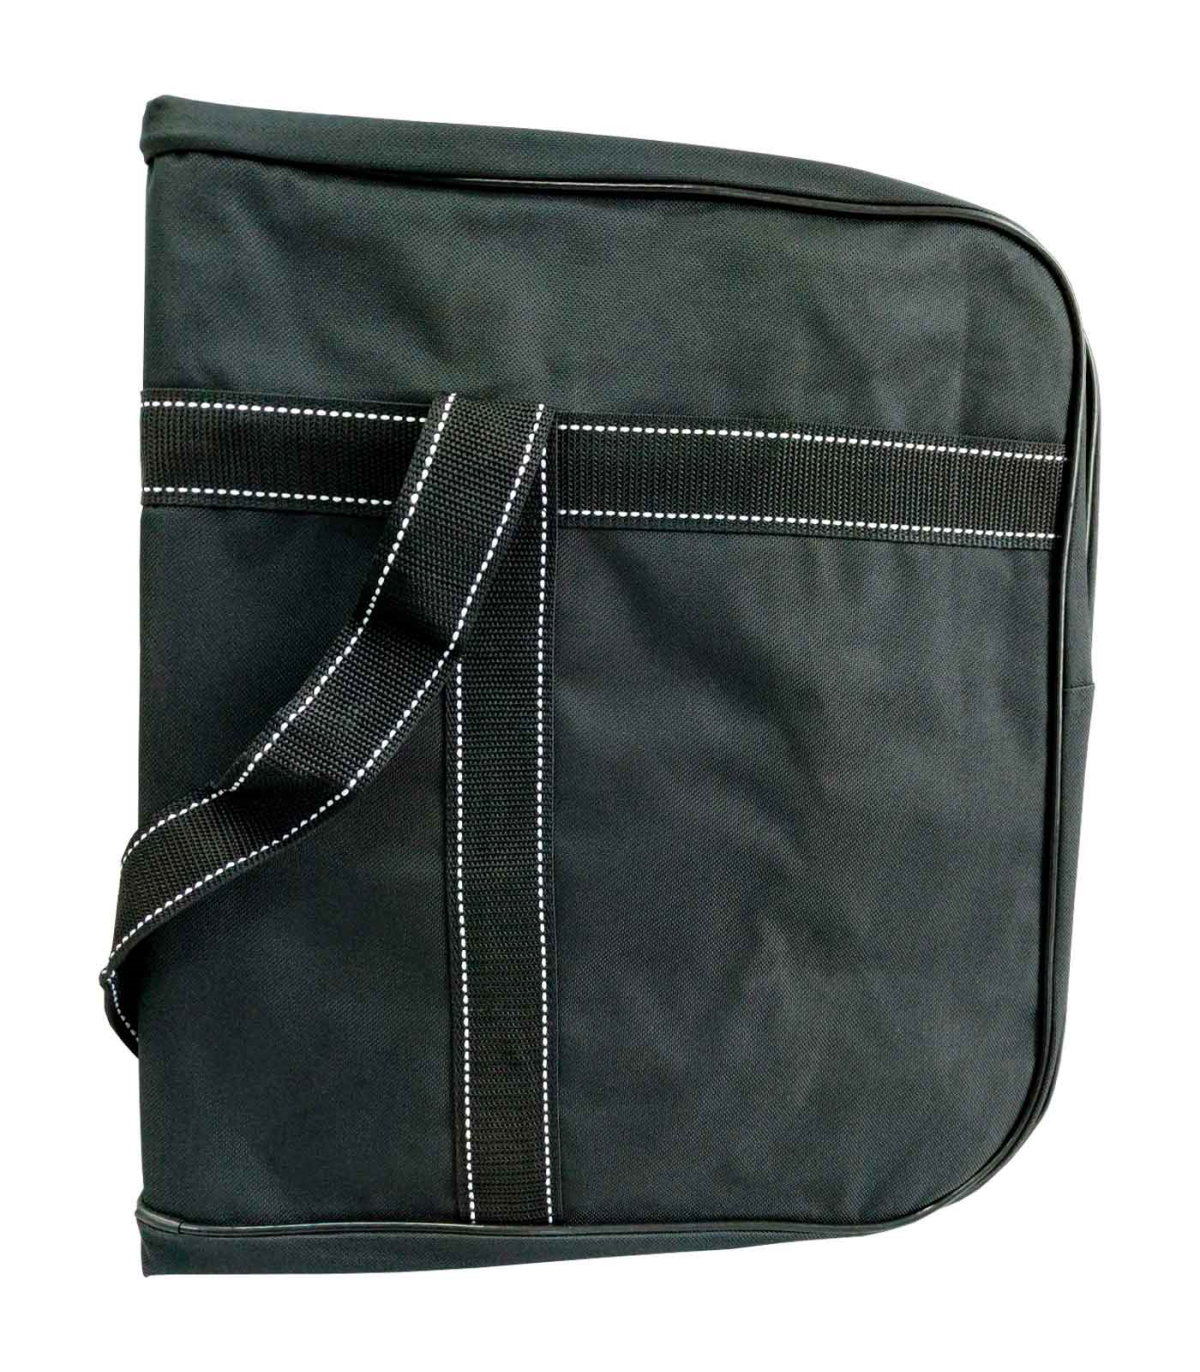 Tradineur - Bolsa de viaje de tela con asas y correa de hombro - Fabricado  en Poliéster - bolsillo con cremallera, plegable, lig